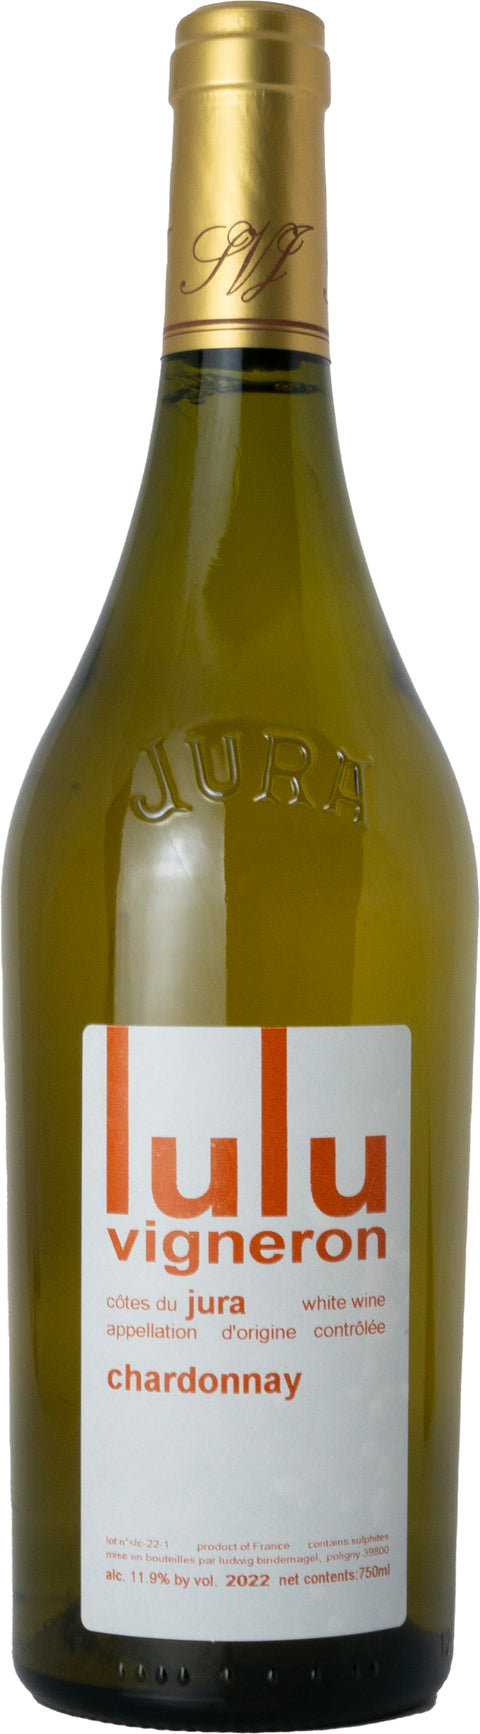 Chardonnay - Lulu Vigneron - 2022